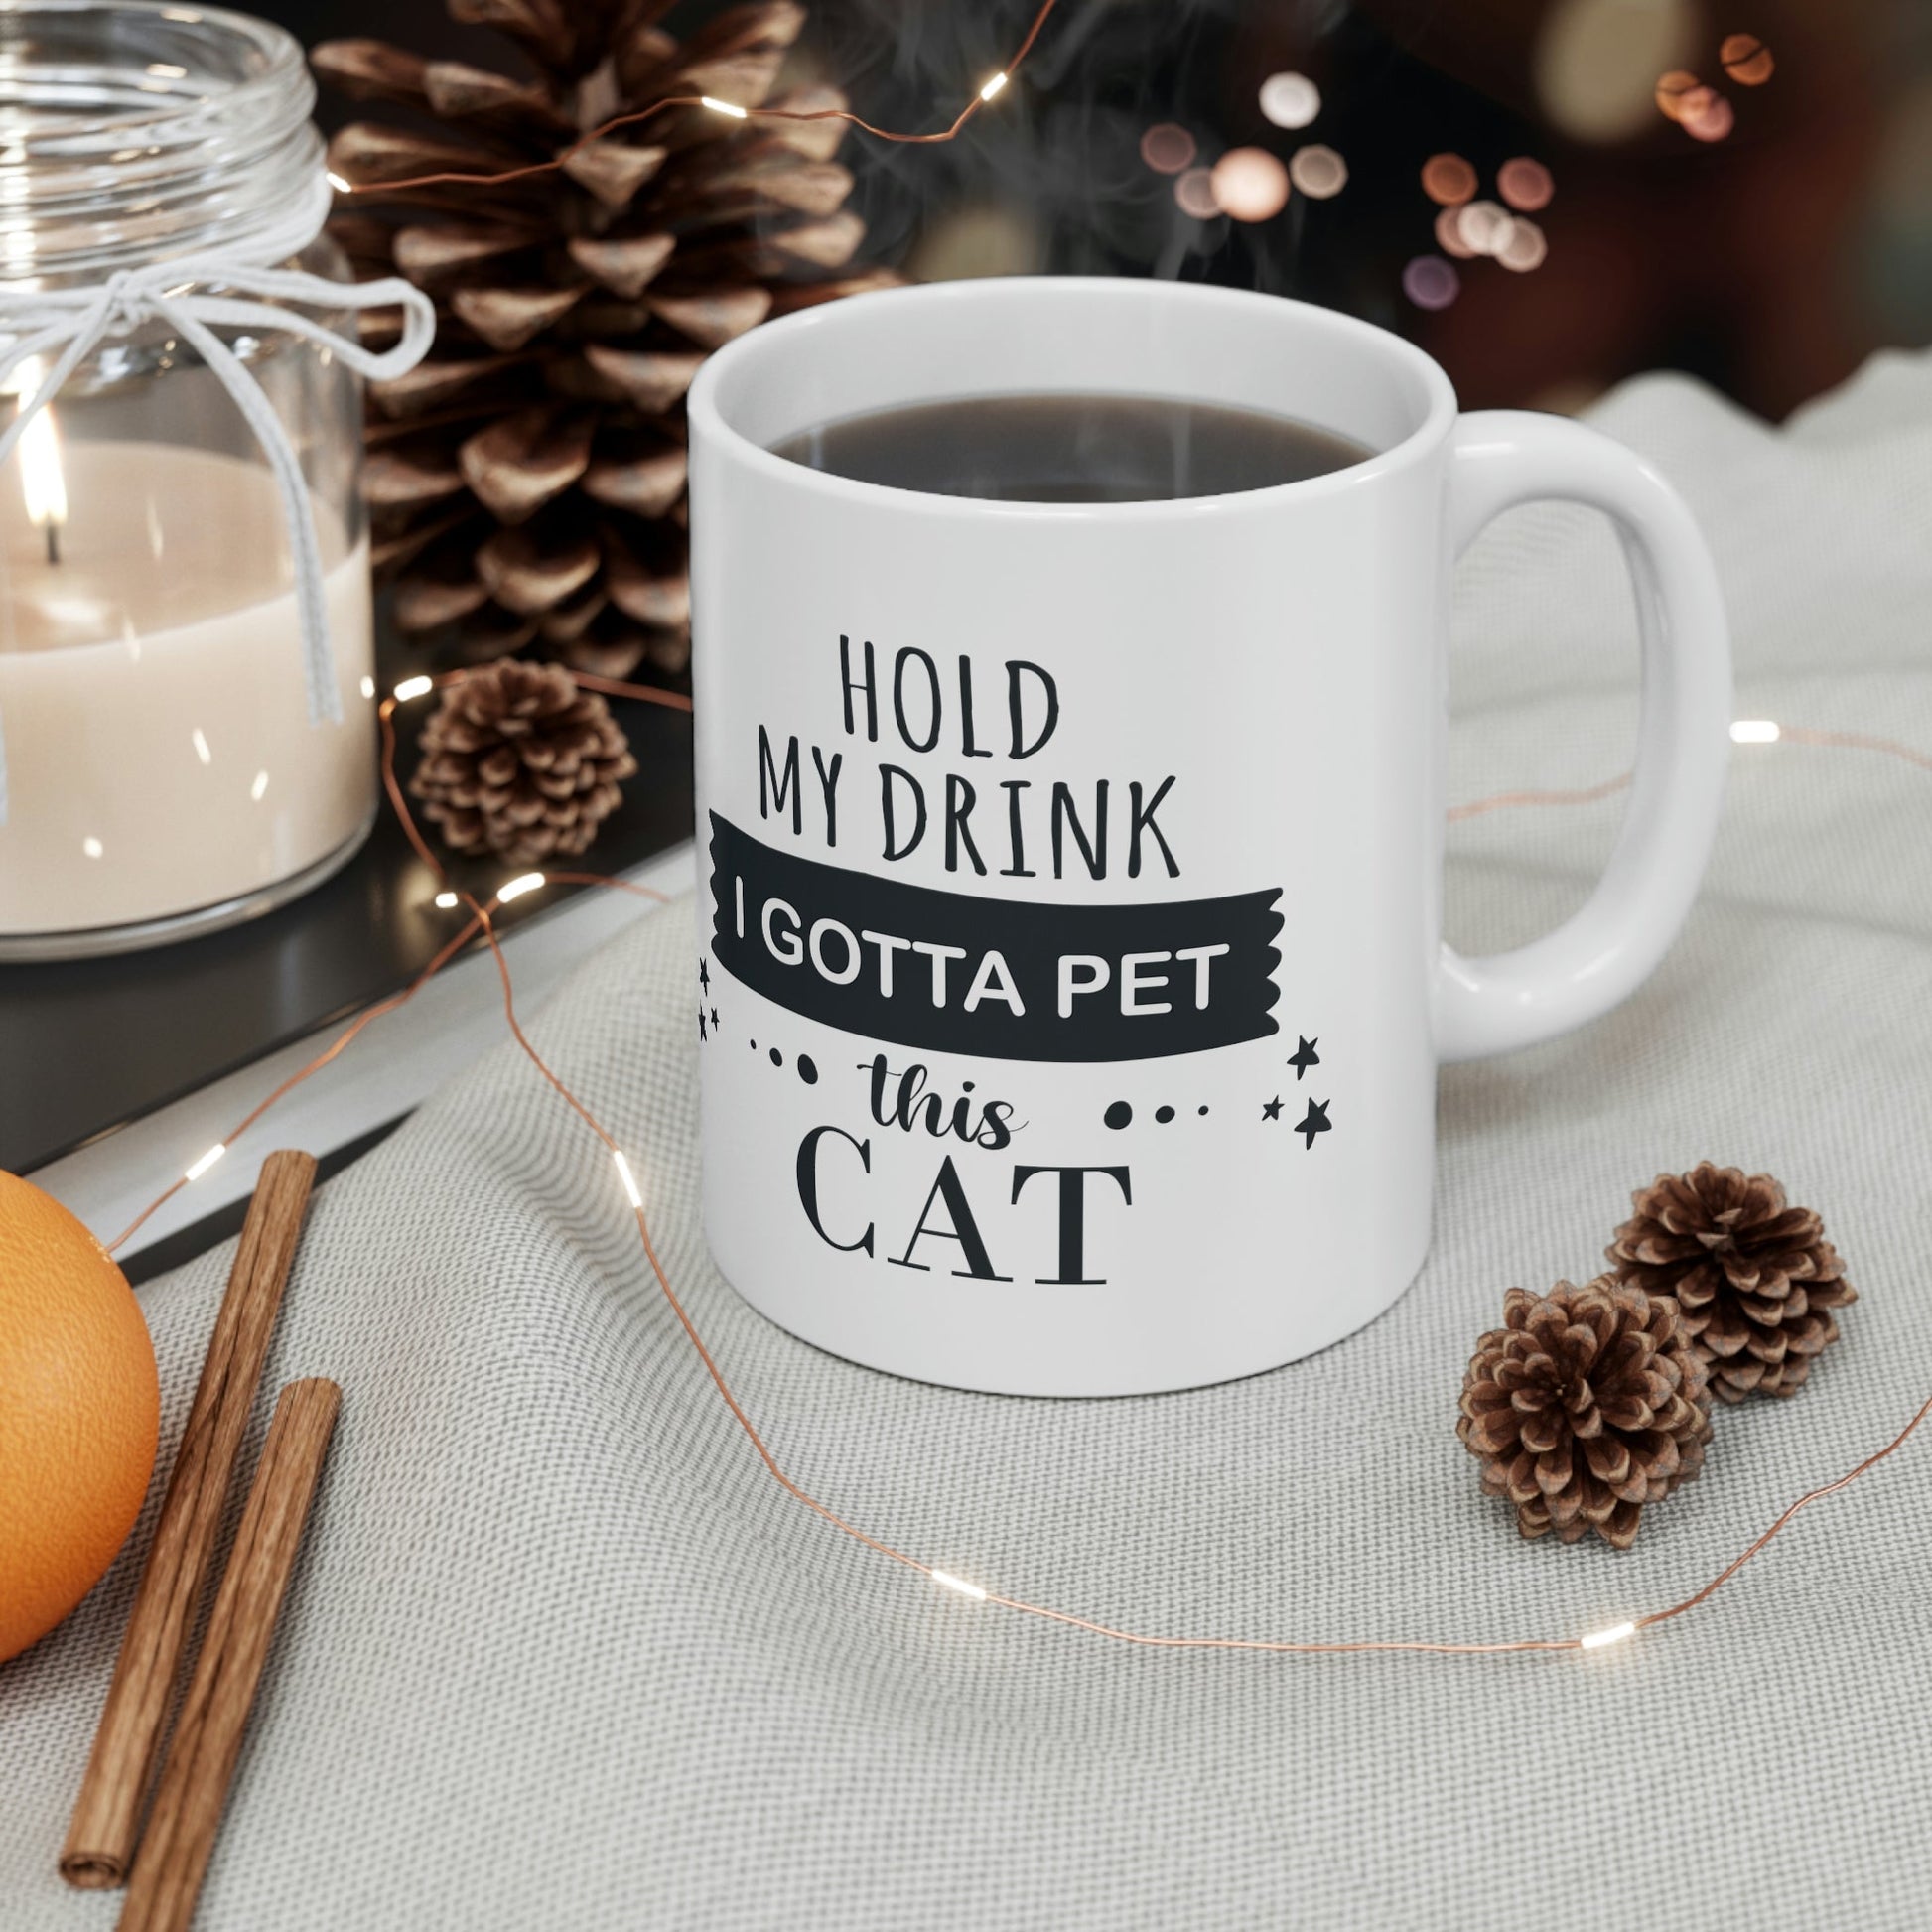 Hold My Drink I Gotta Pet This Cat Text Slogan Ceramic Mug 11oz Ichaku [Perfect Gifts Selection]